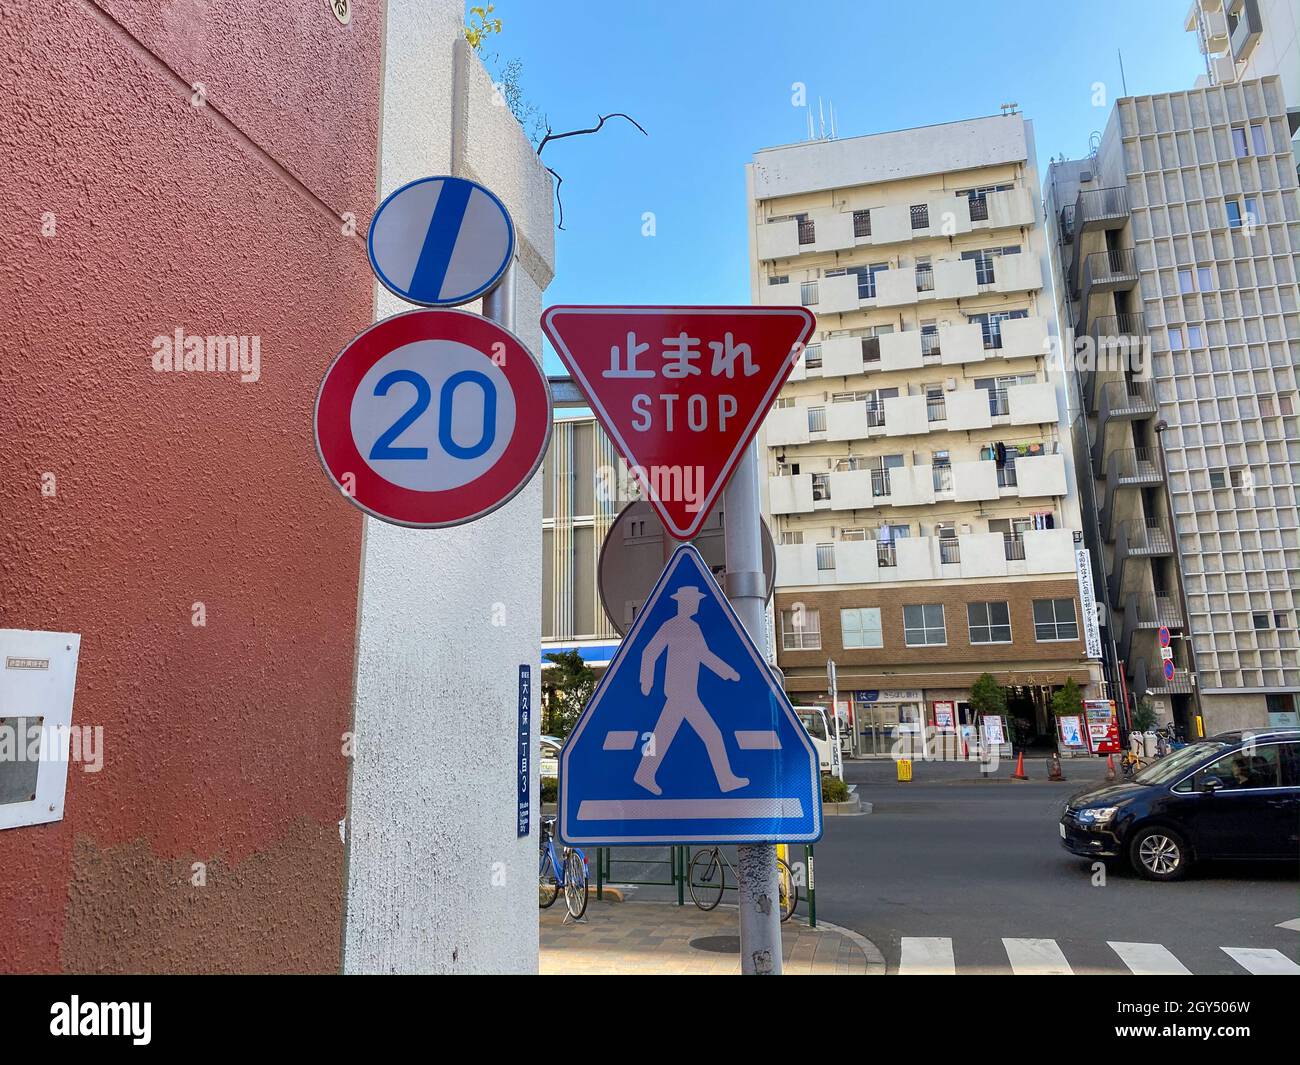 Tokyo, Japan - 21 November 2019: Japanese traffic sign. Stop is written in Japanese. Stock Photo